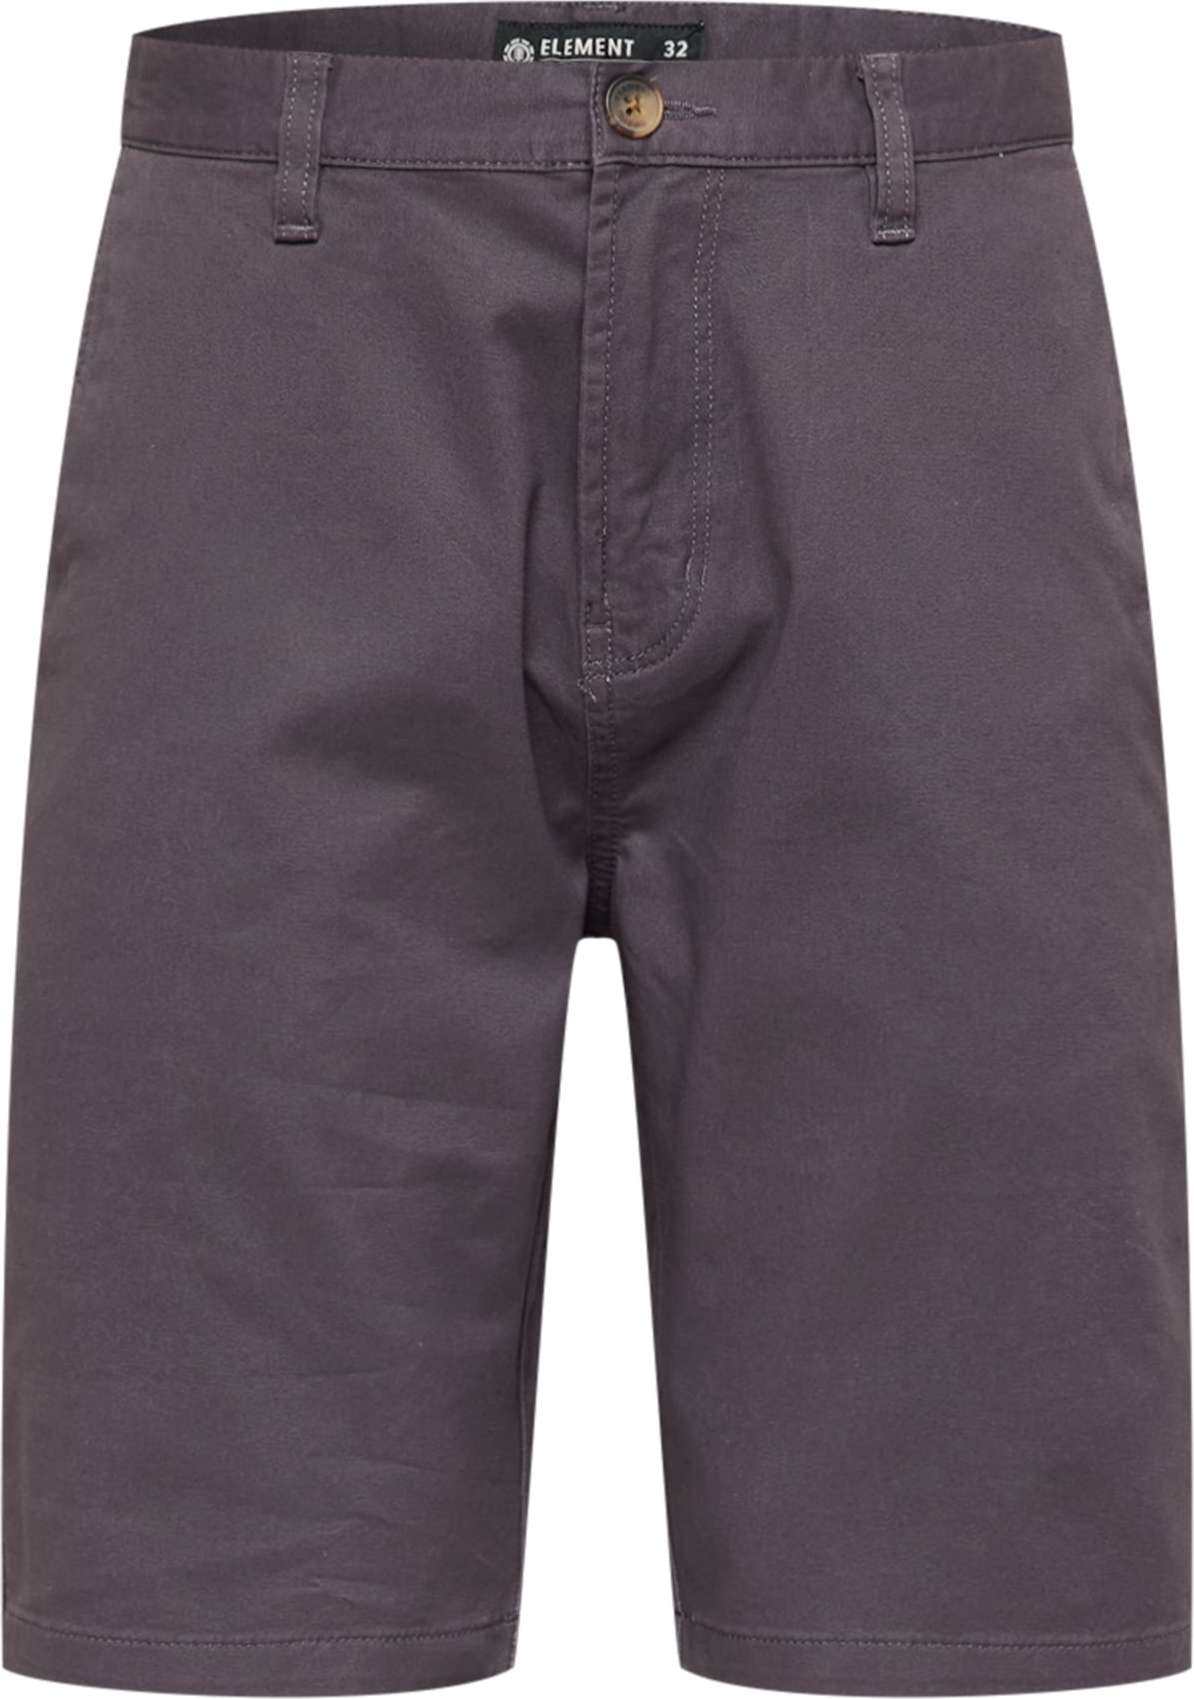 ELEMENT Outdoorové kalhoty 'HOWLAND' barvy bláta